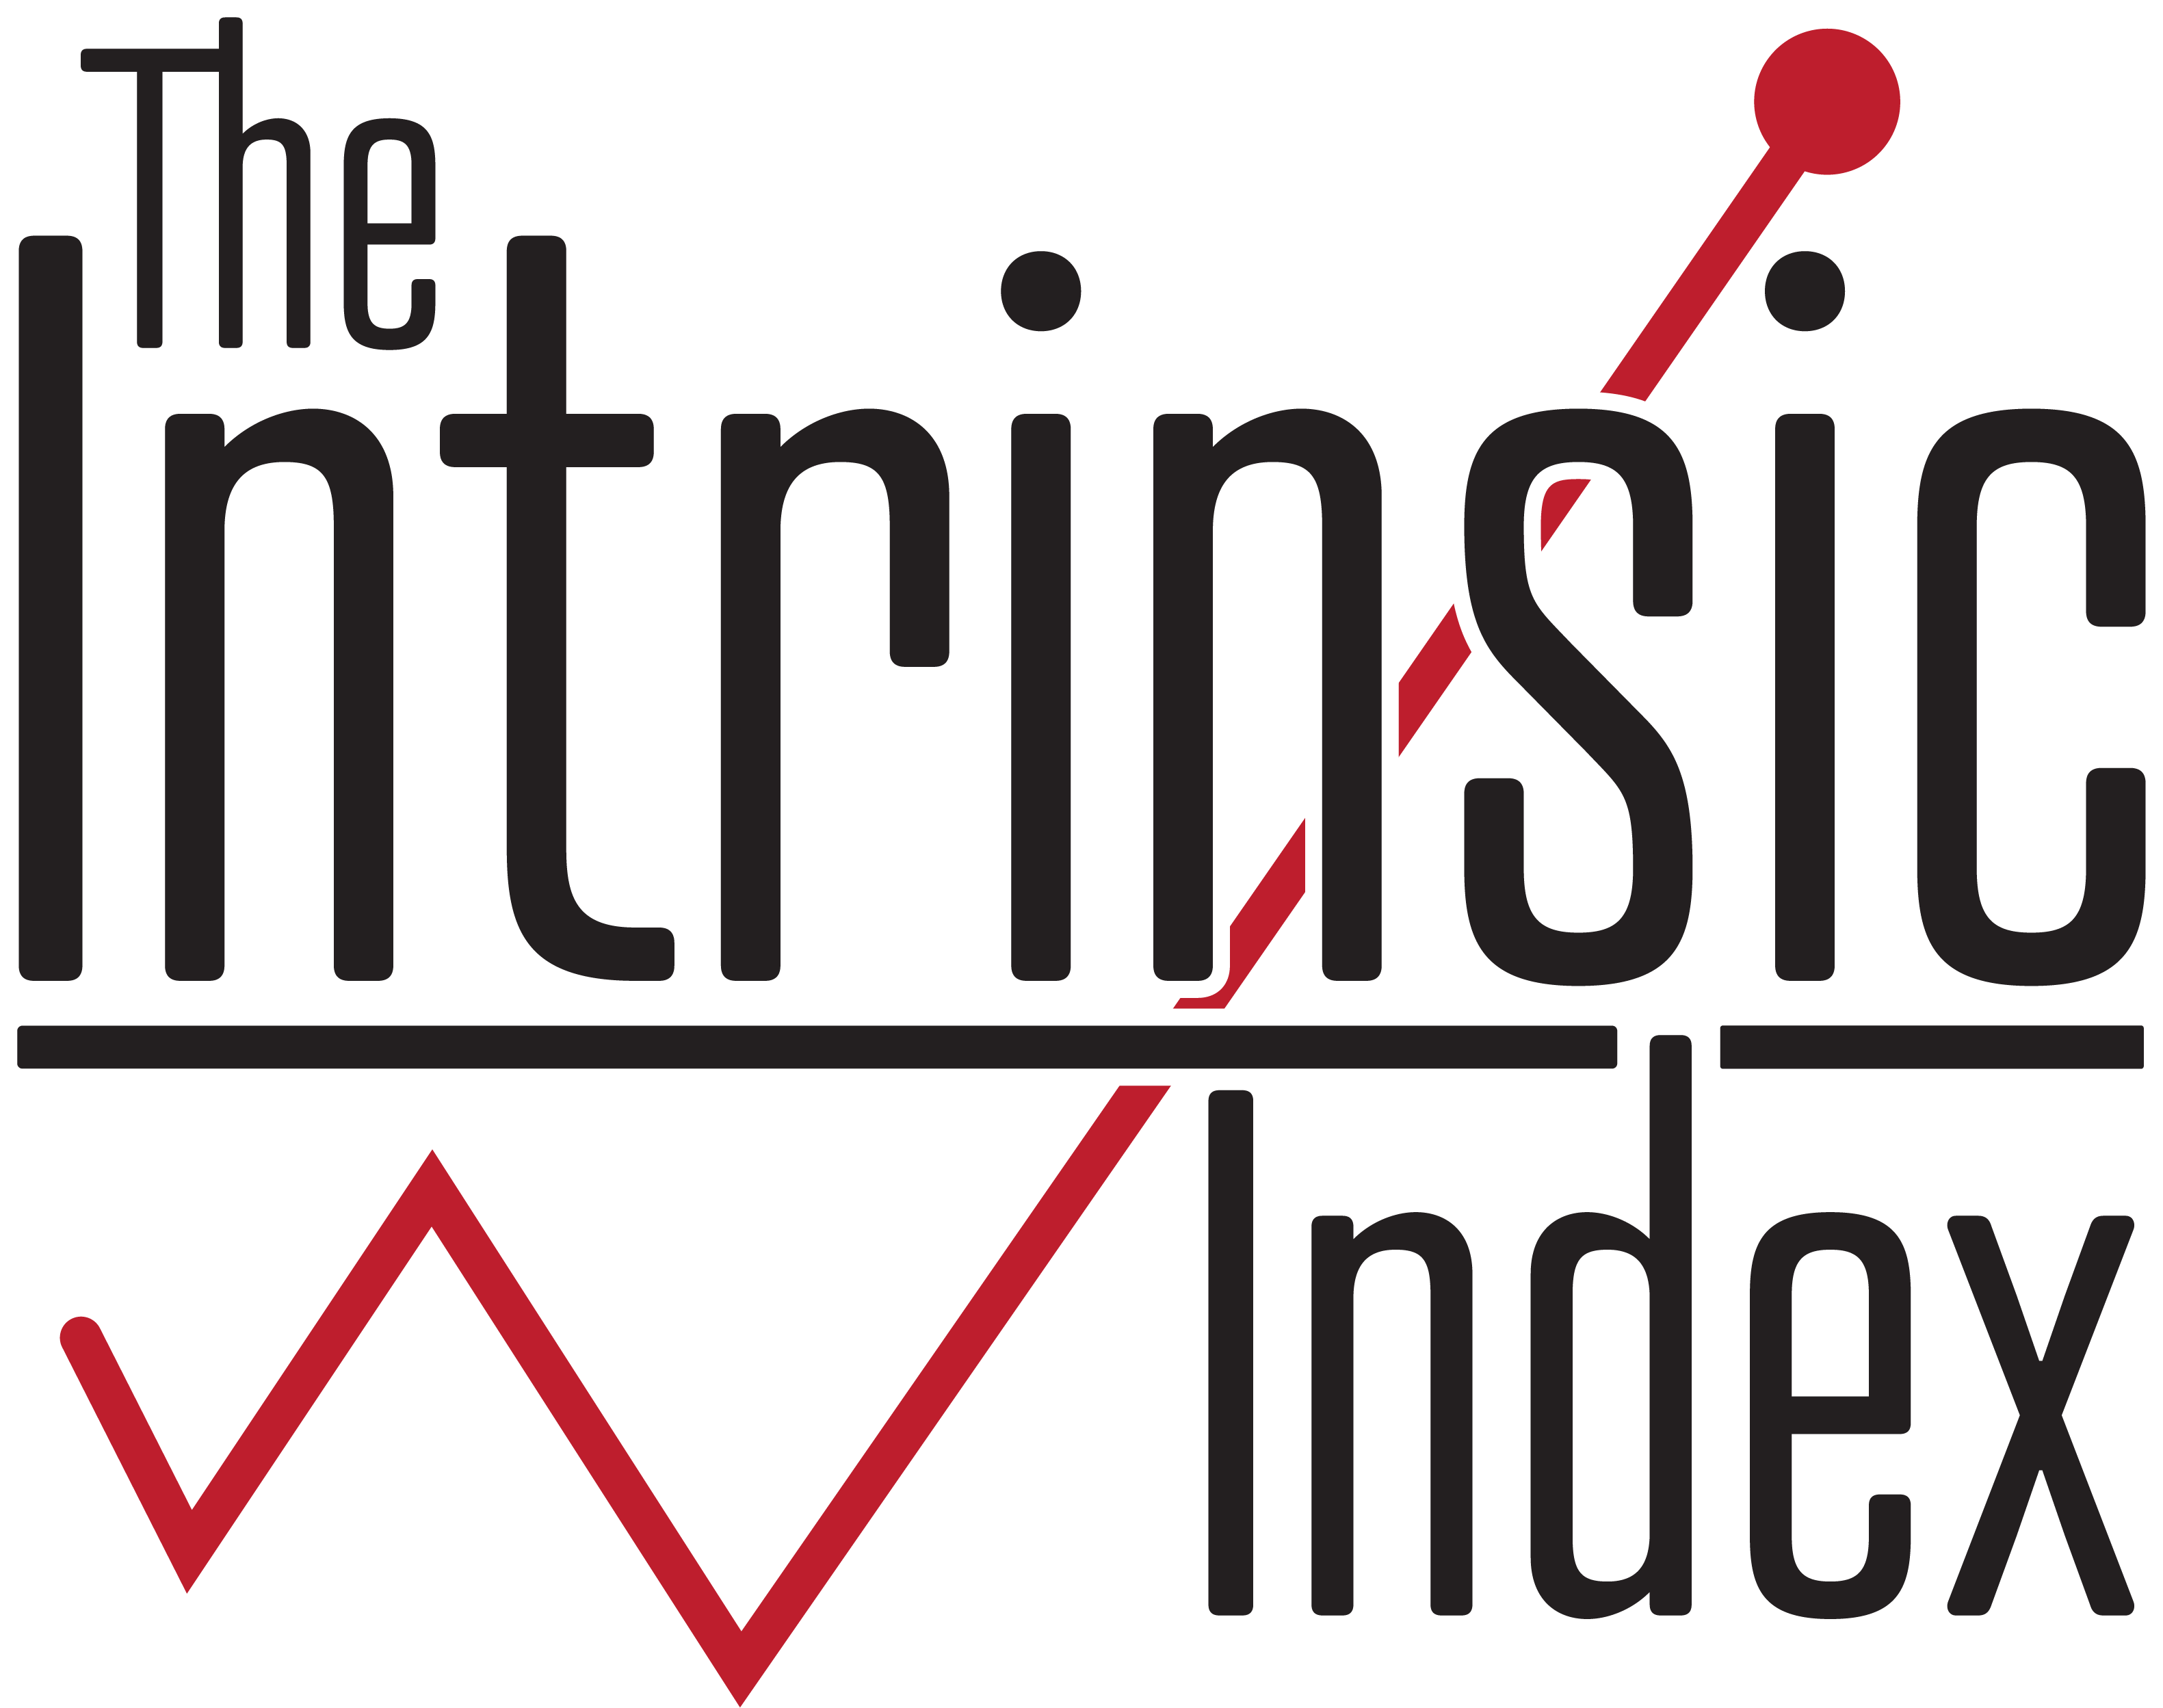 The Intrinsic Index